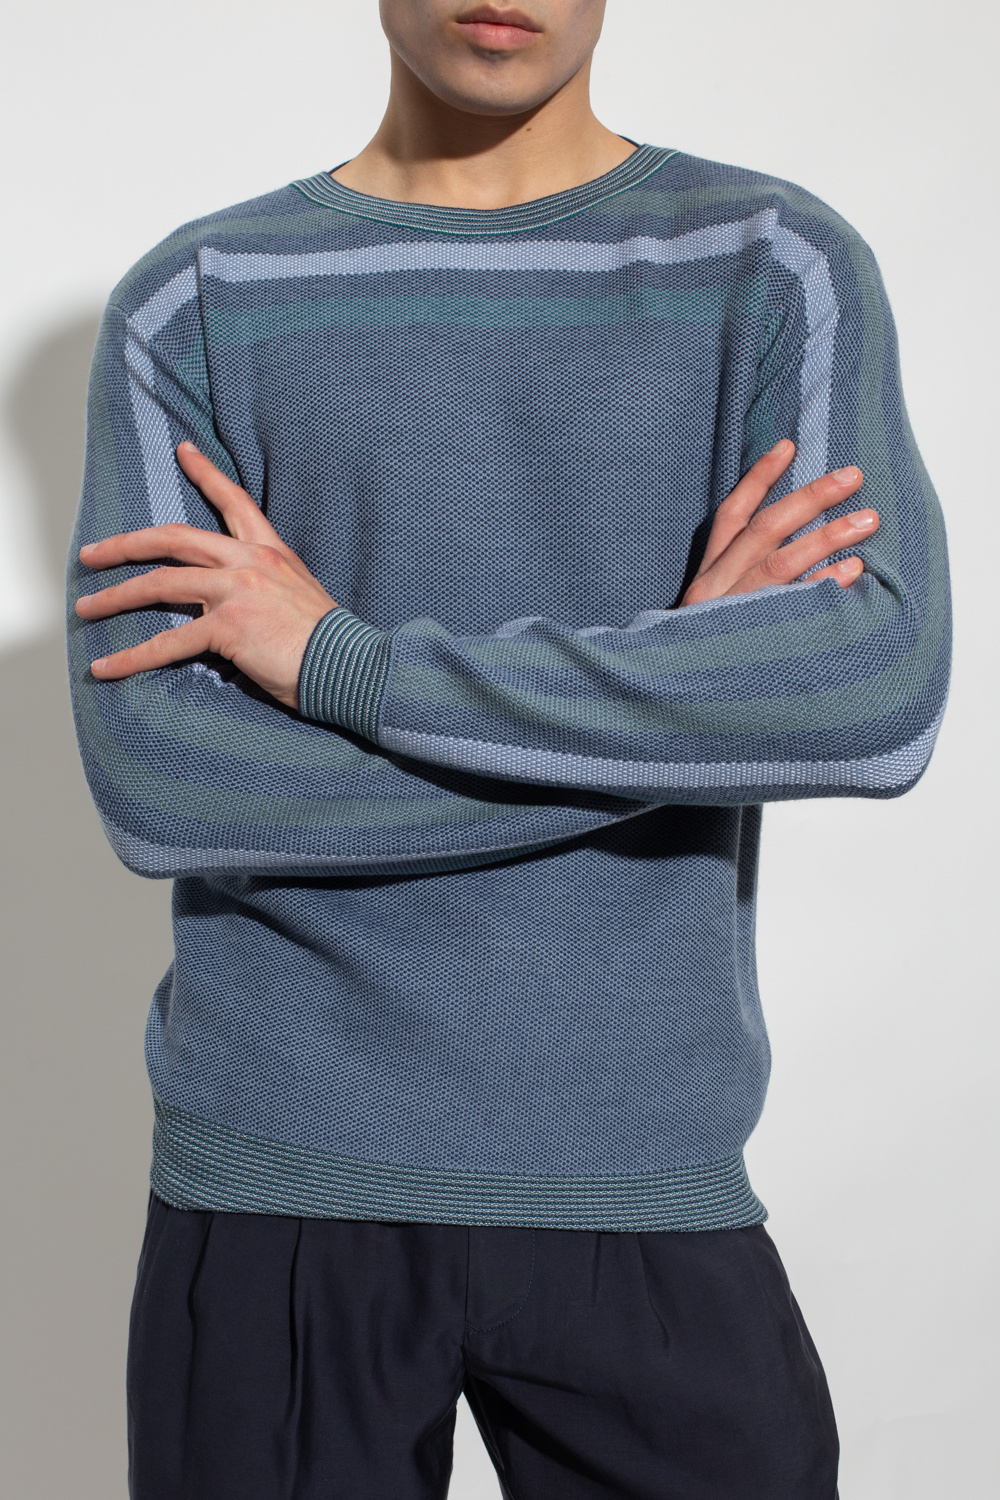 Giorgio armani tricot Wool sweater